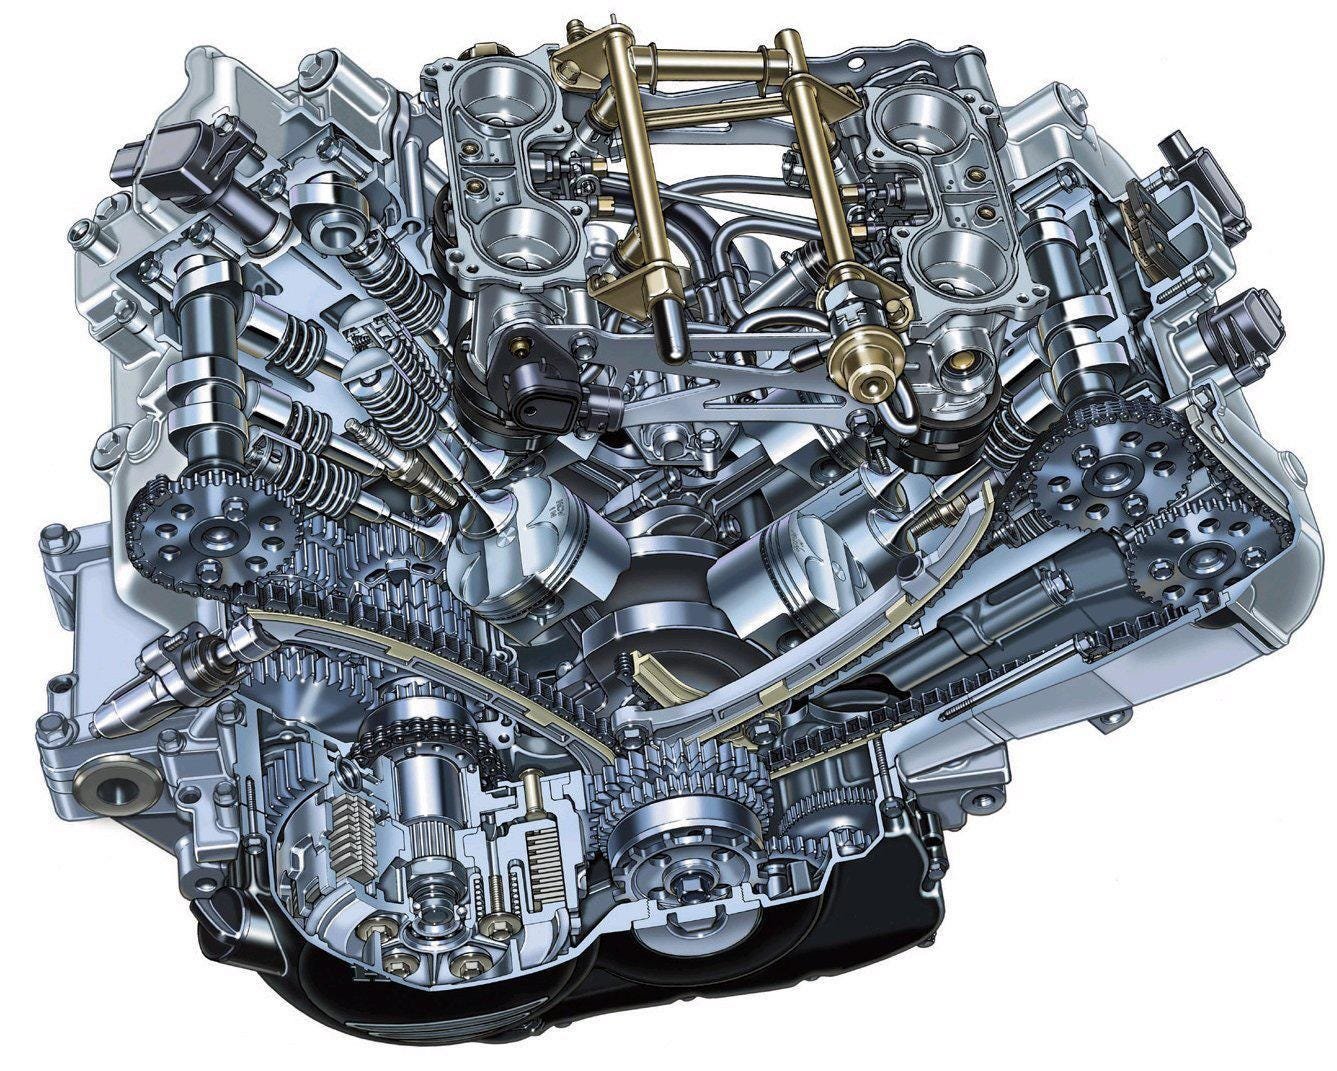 The basics of V4 engines - Medium.